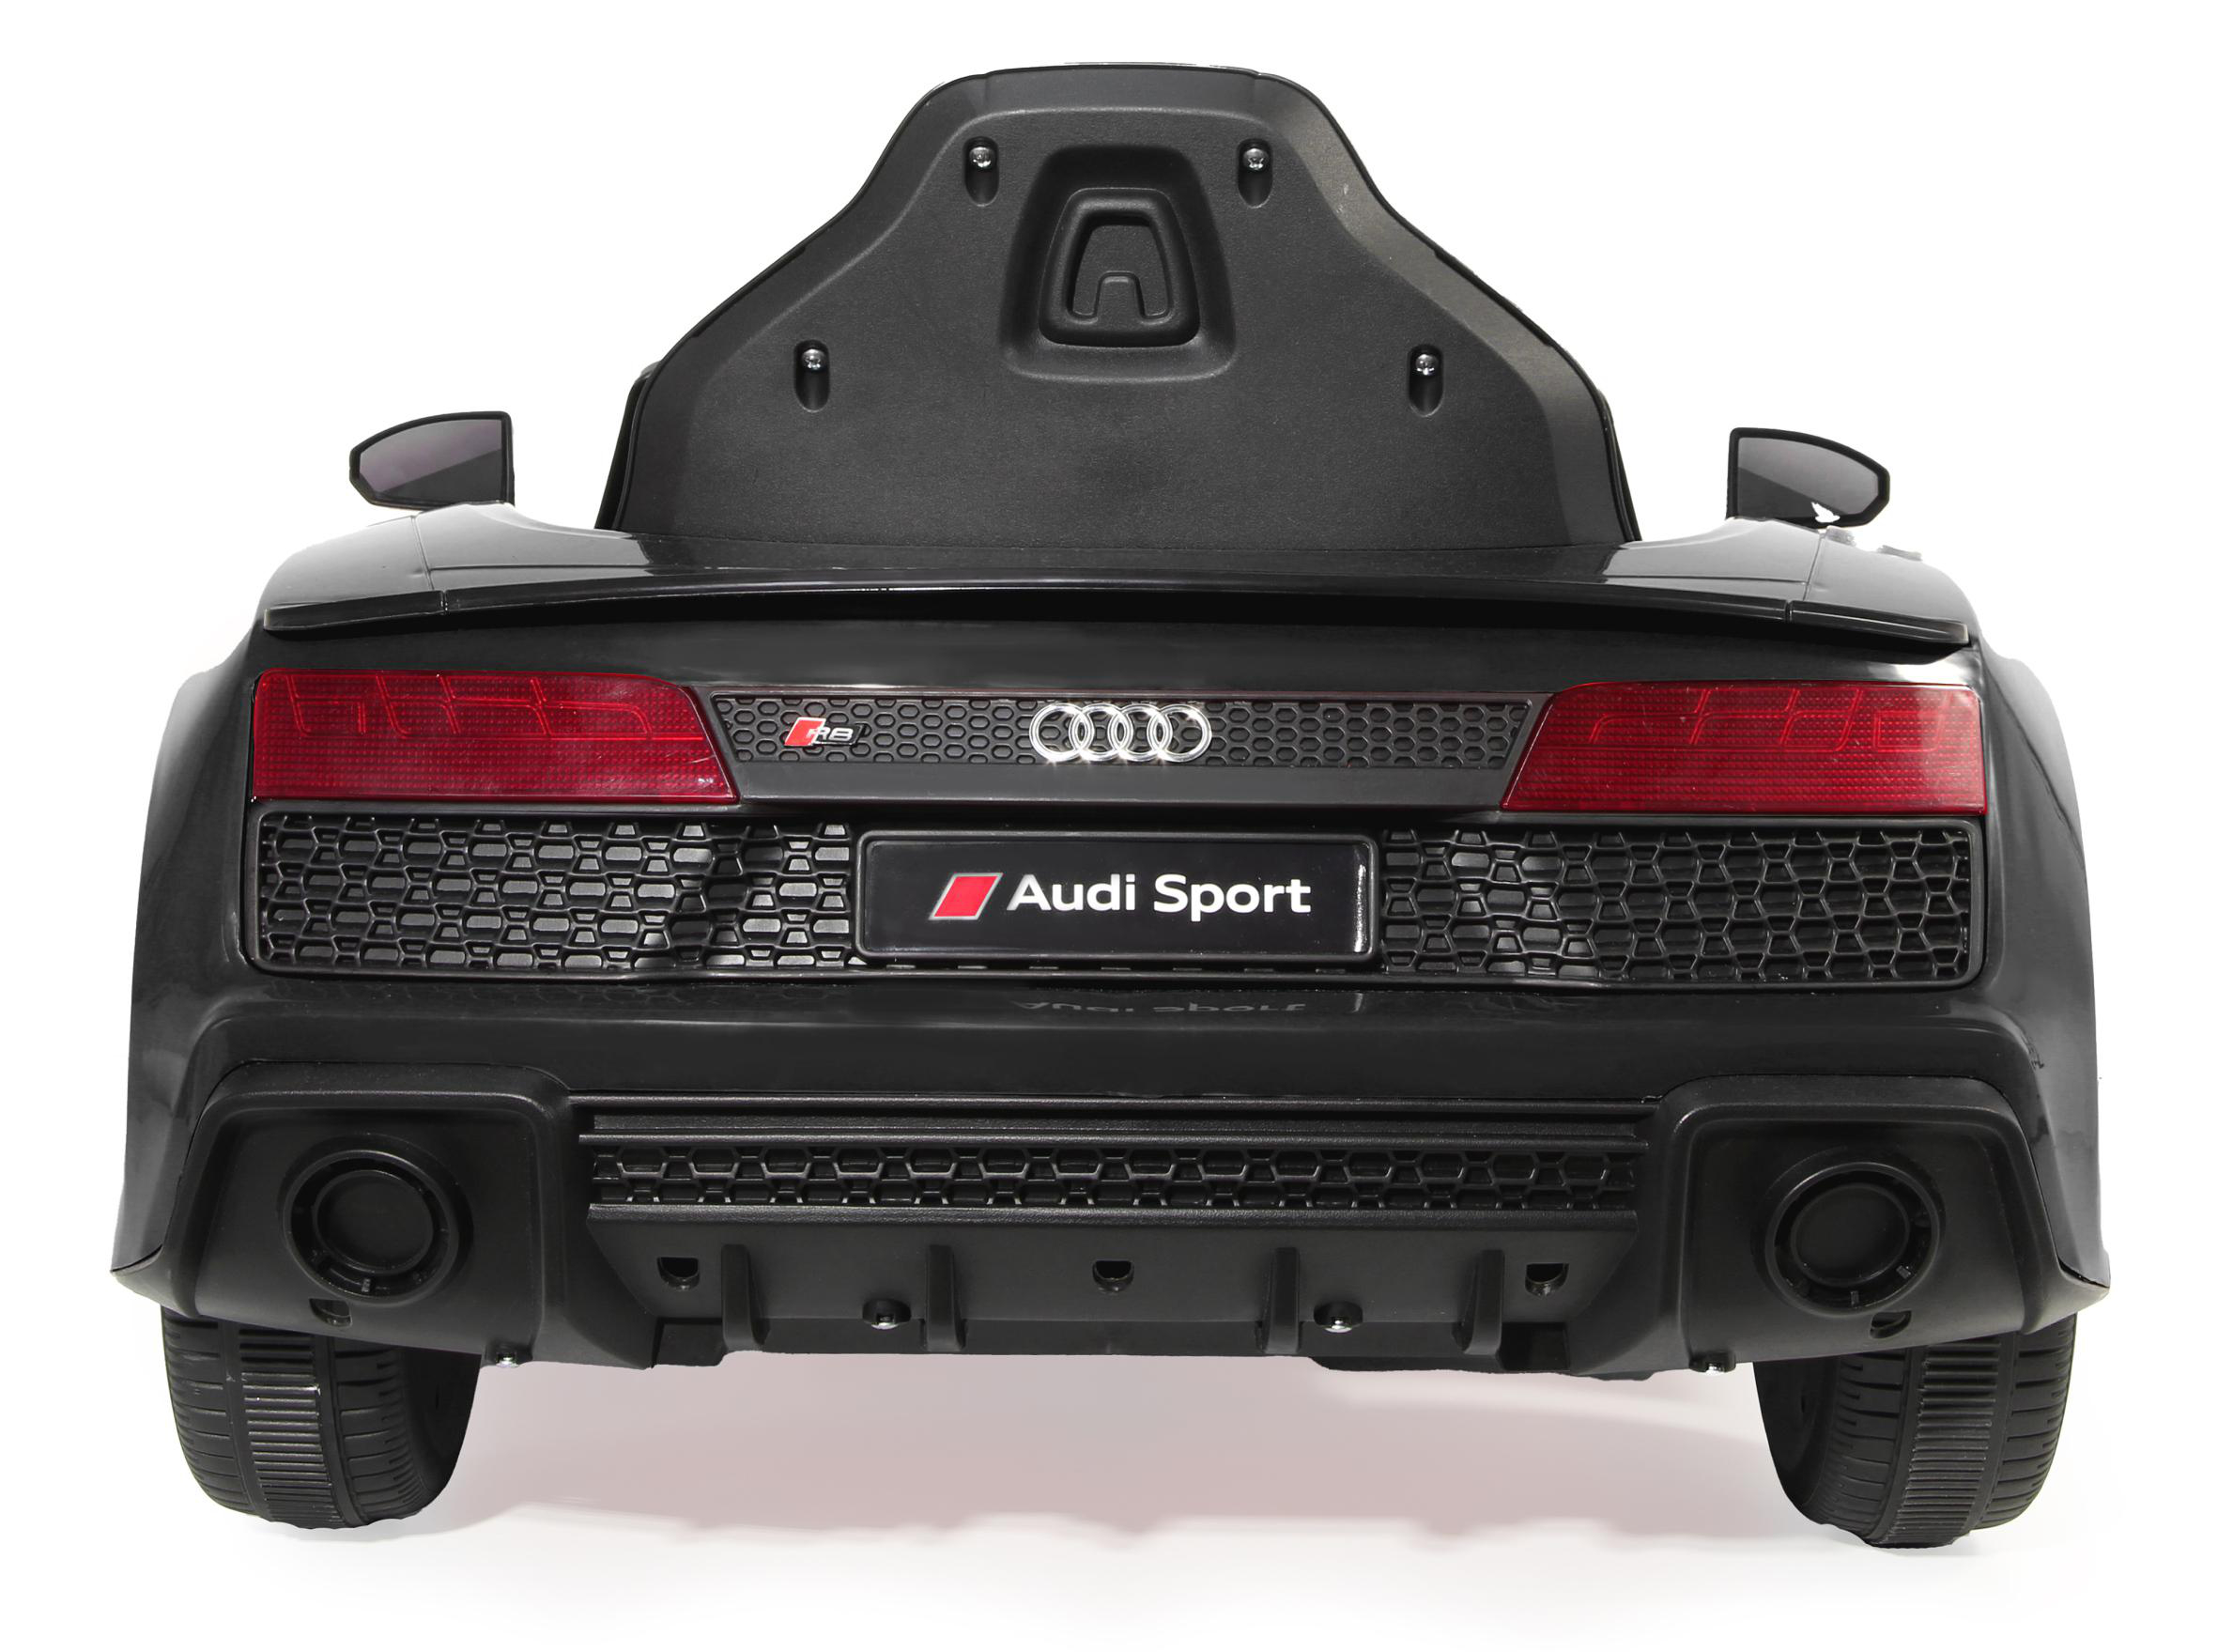 JAMARA KIDS schwarz Starter Audi Einhell 18V R8 Set inkl. Schwarz Ride-on X-Change Power Elektrofahrzeug Spyder